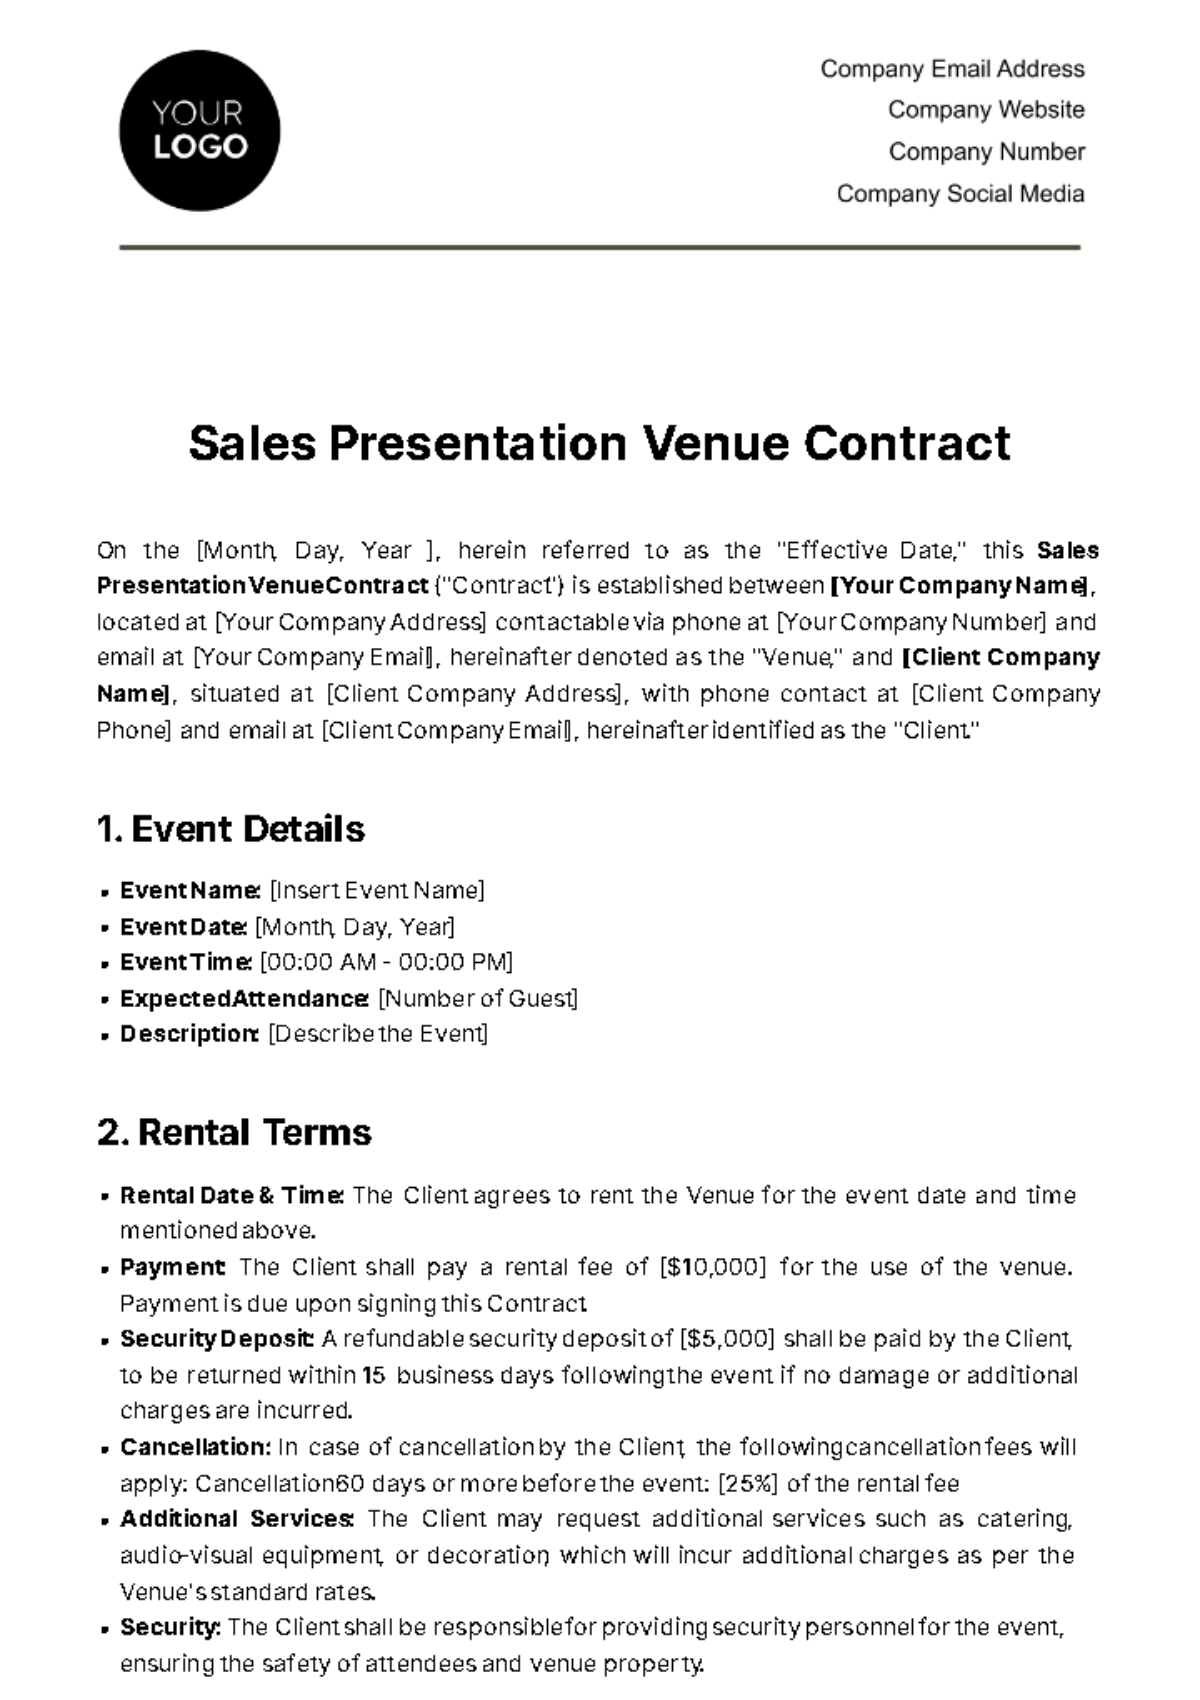 Sales Presentation Venue Contract Template